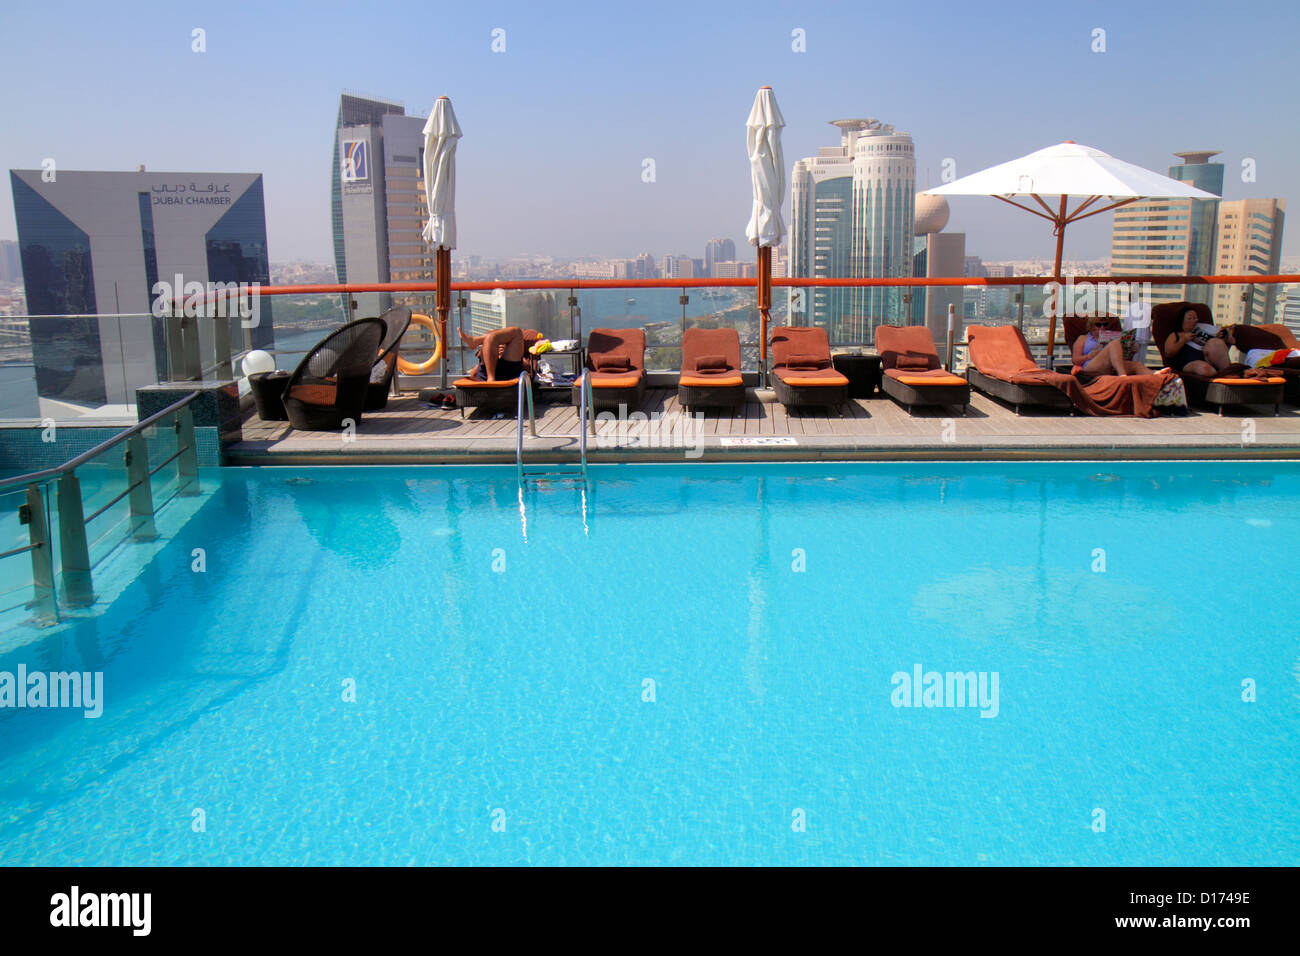 Dubai UAE,United Arab Emirates,Baniyas Road,Hilton Dubai Creek,hotel,rooftop swimming pool,water,lounge chairs,UAE121011041 Stock Photo